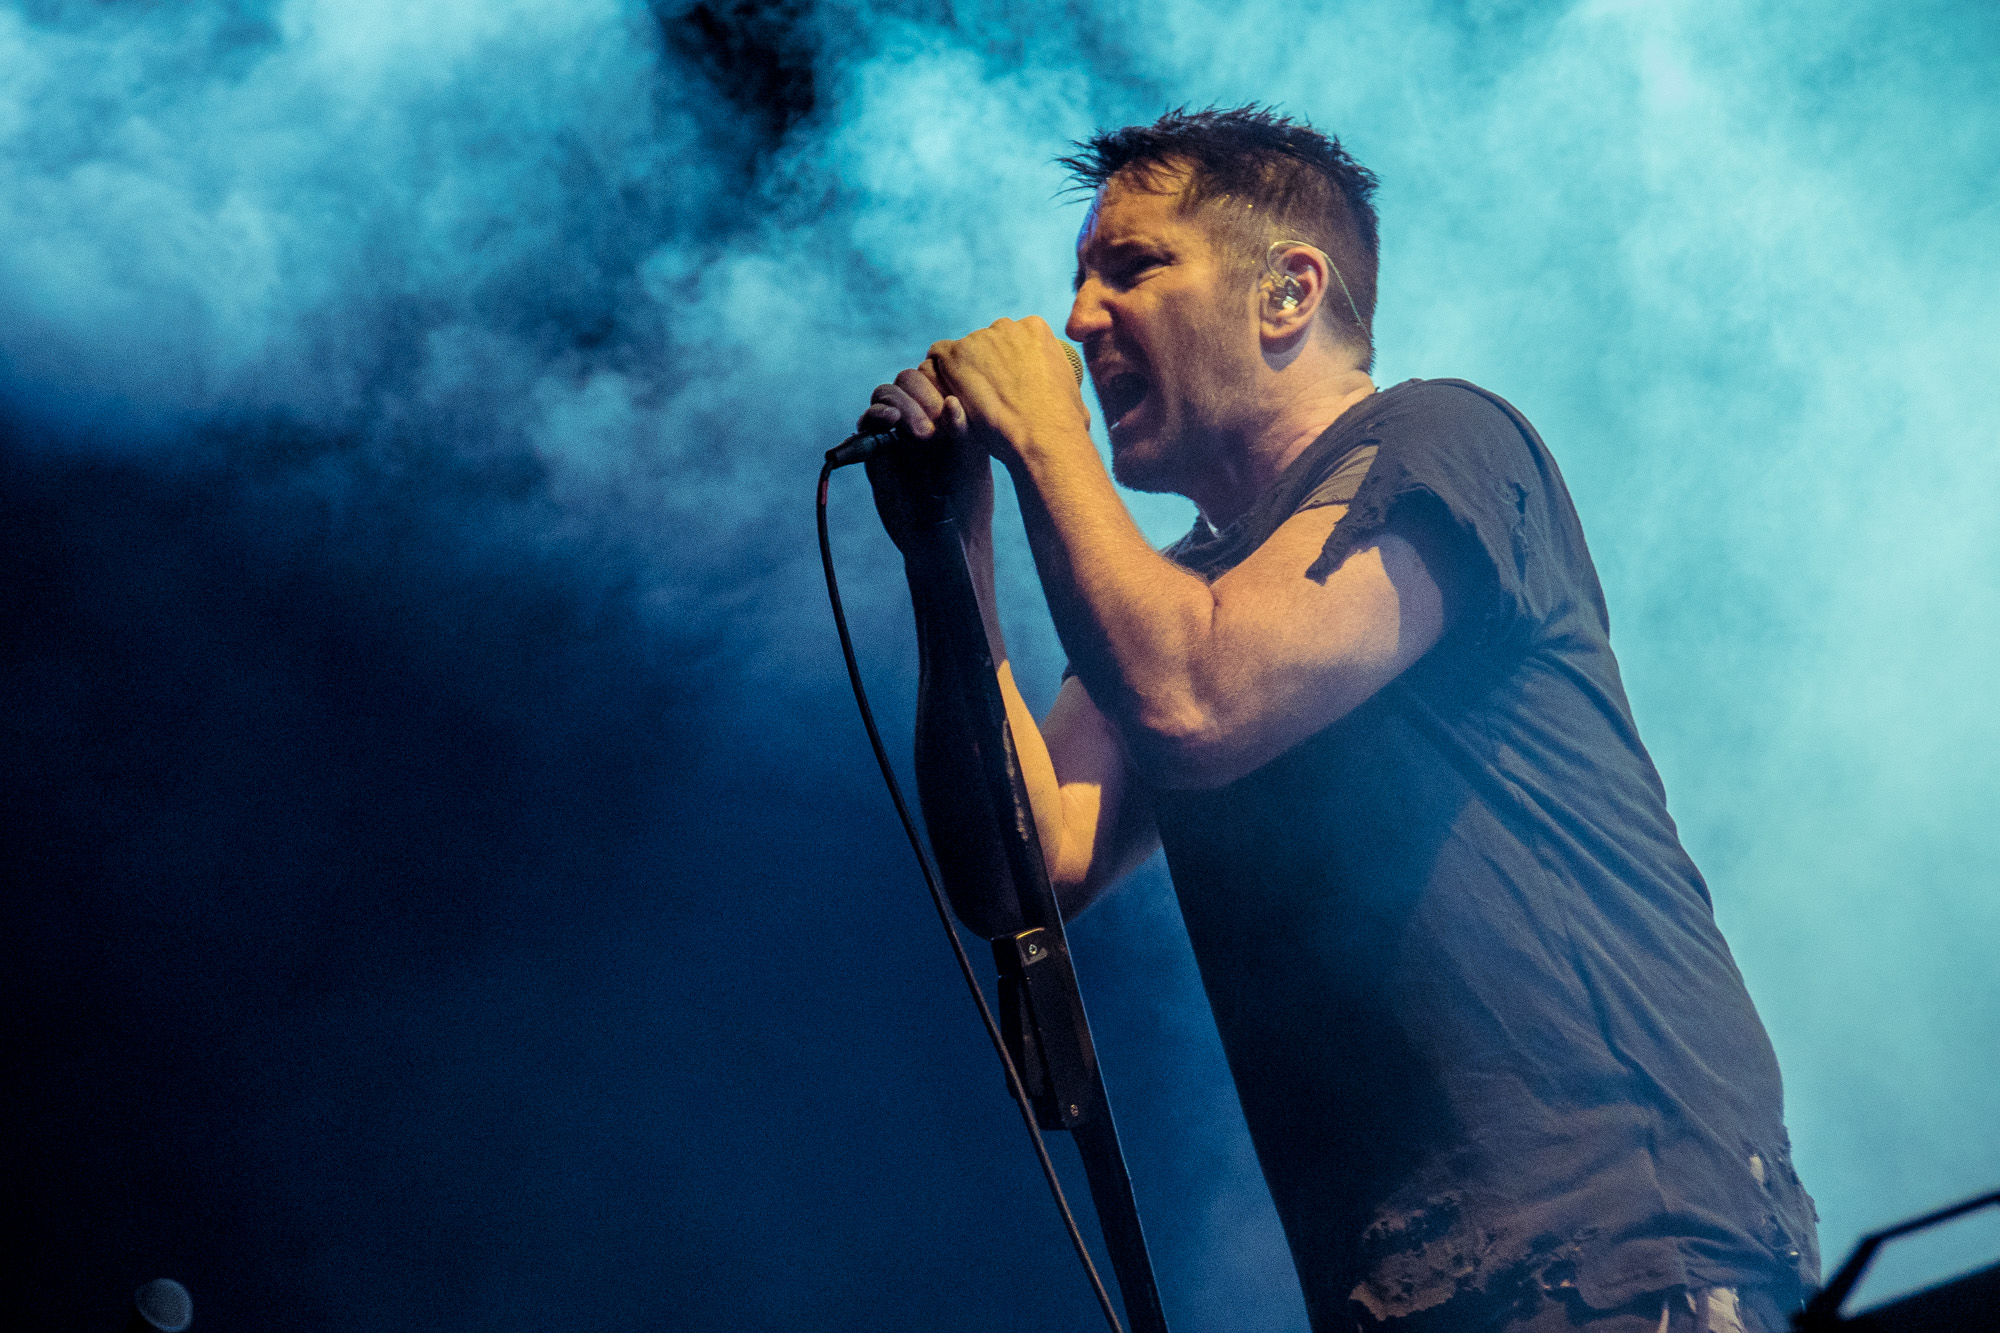 FLOOD - Nine Inch Nails Celebrate April Fools' Day with “Strobe Light” LP